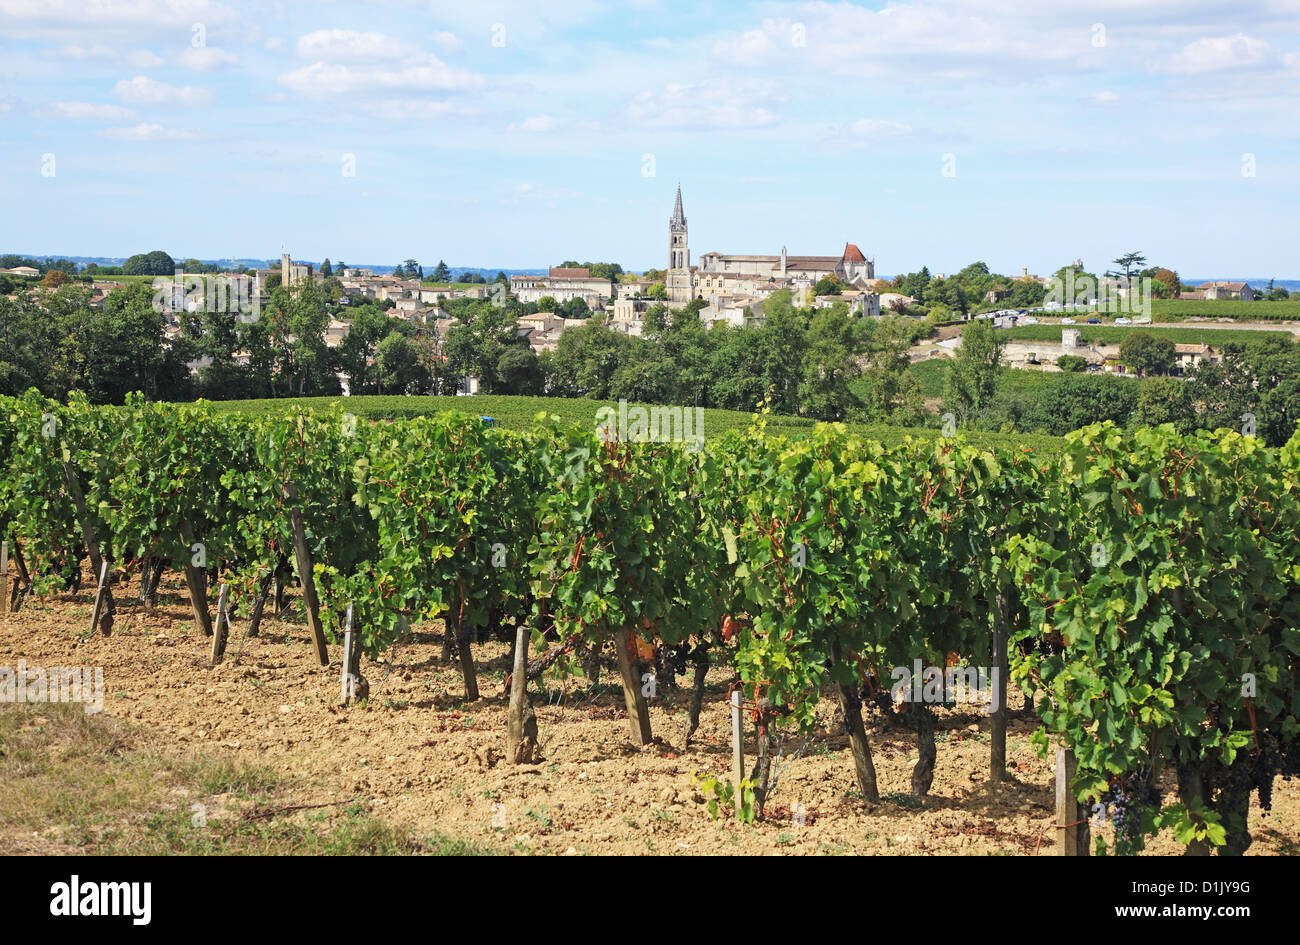 France, Gironde, Saint-Emilion, Bordeaux vineyards Stock Photo